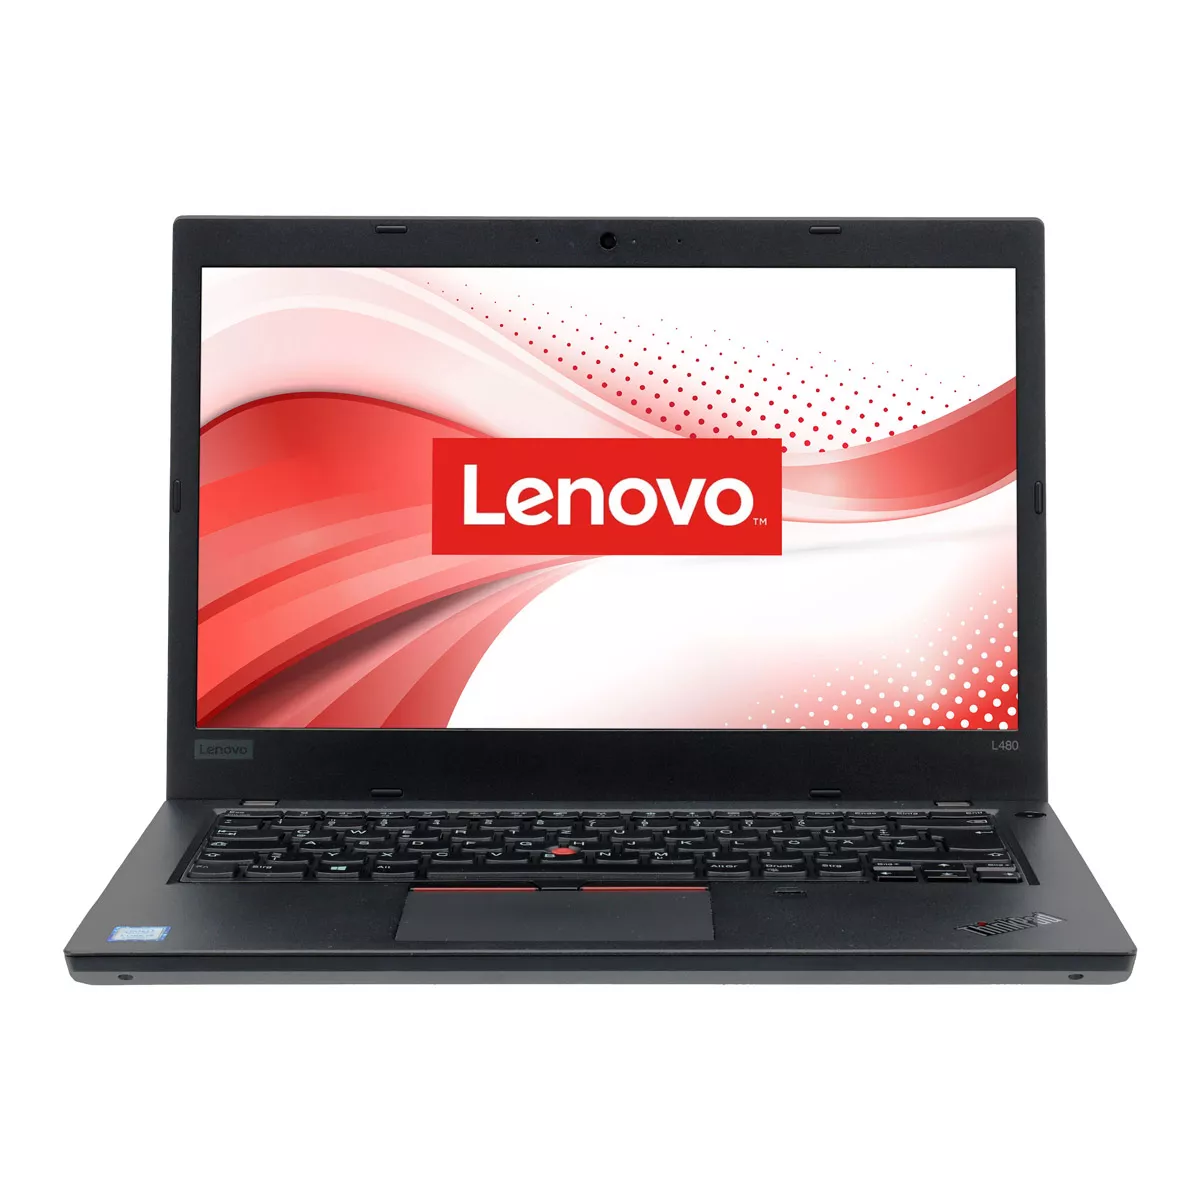 Lenovo ThinkPad L480 Core i5 8250U Full-HD 16 GB 240 GB nVME M.2 SSD Webcam A+